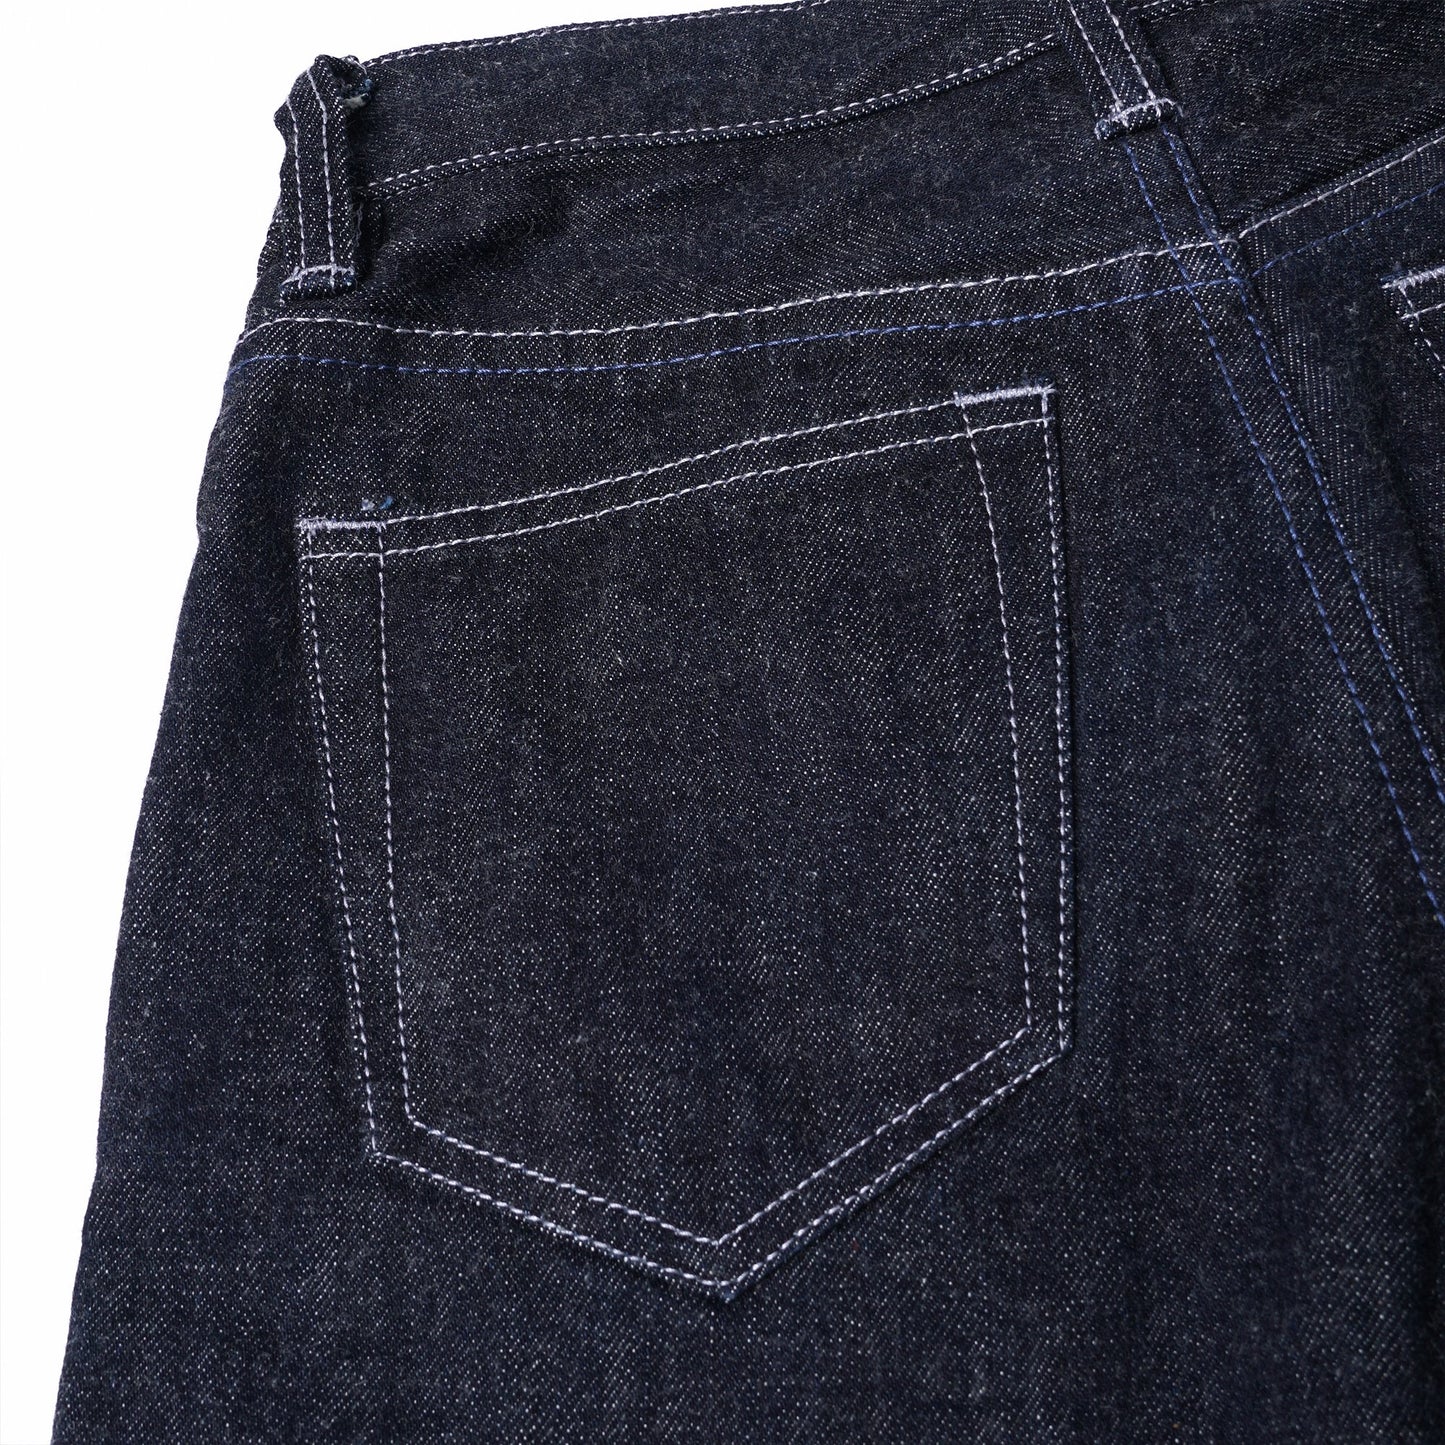 [Custom] No.21 Blue Black Dyed Unwashed Slim Fit Jeans